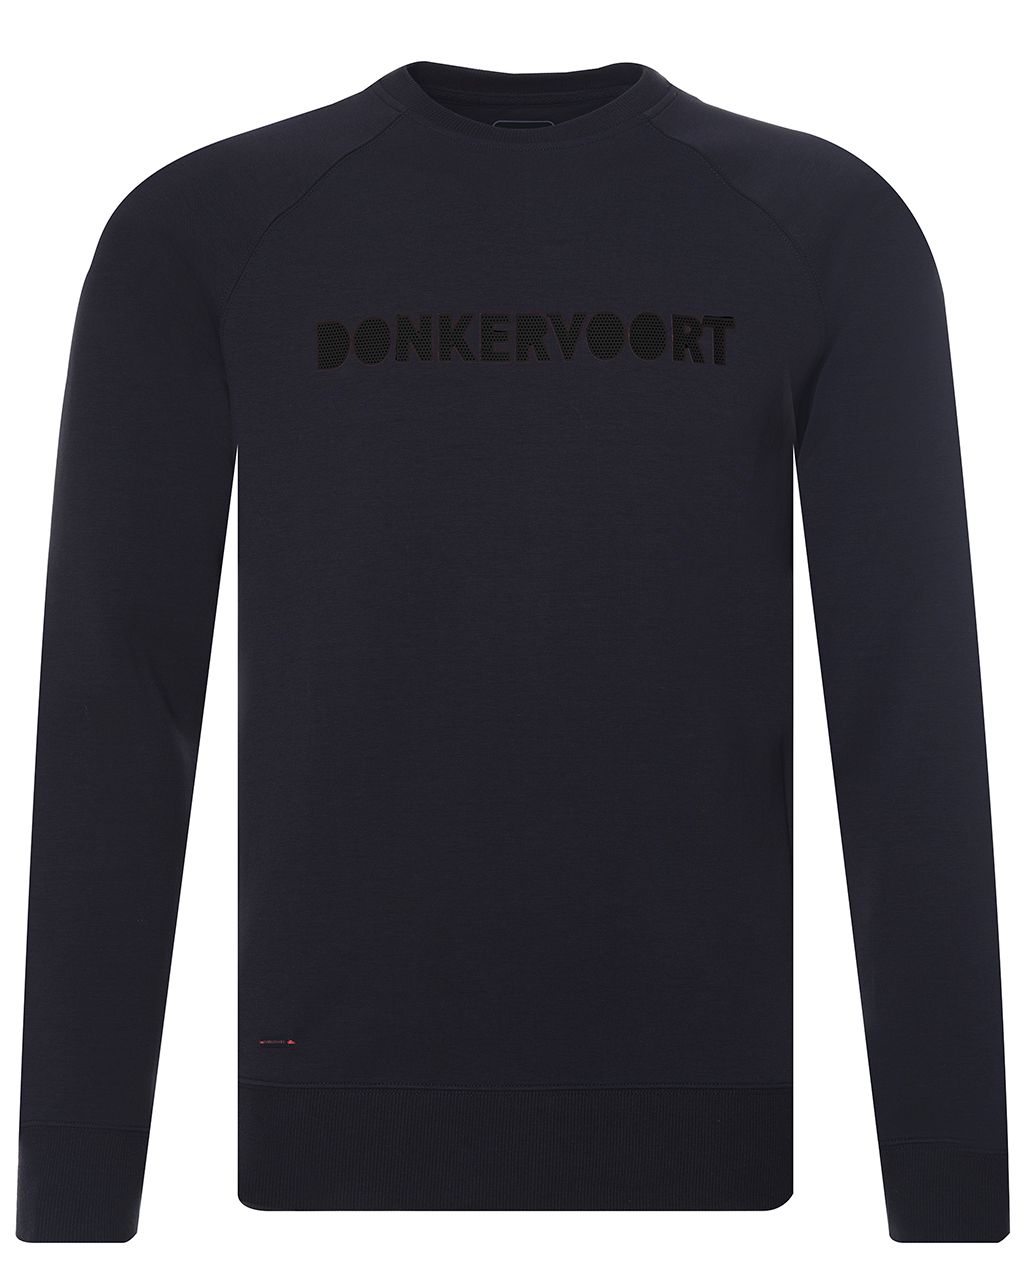 Donkervoort Sweater Zwart uni 071767-003-L